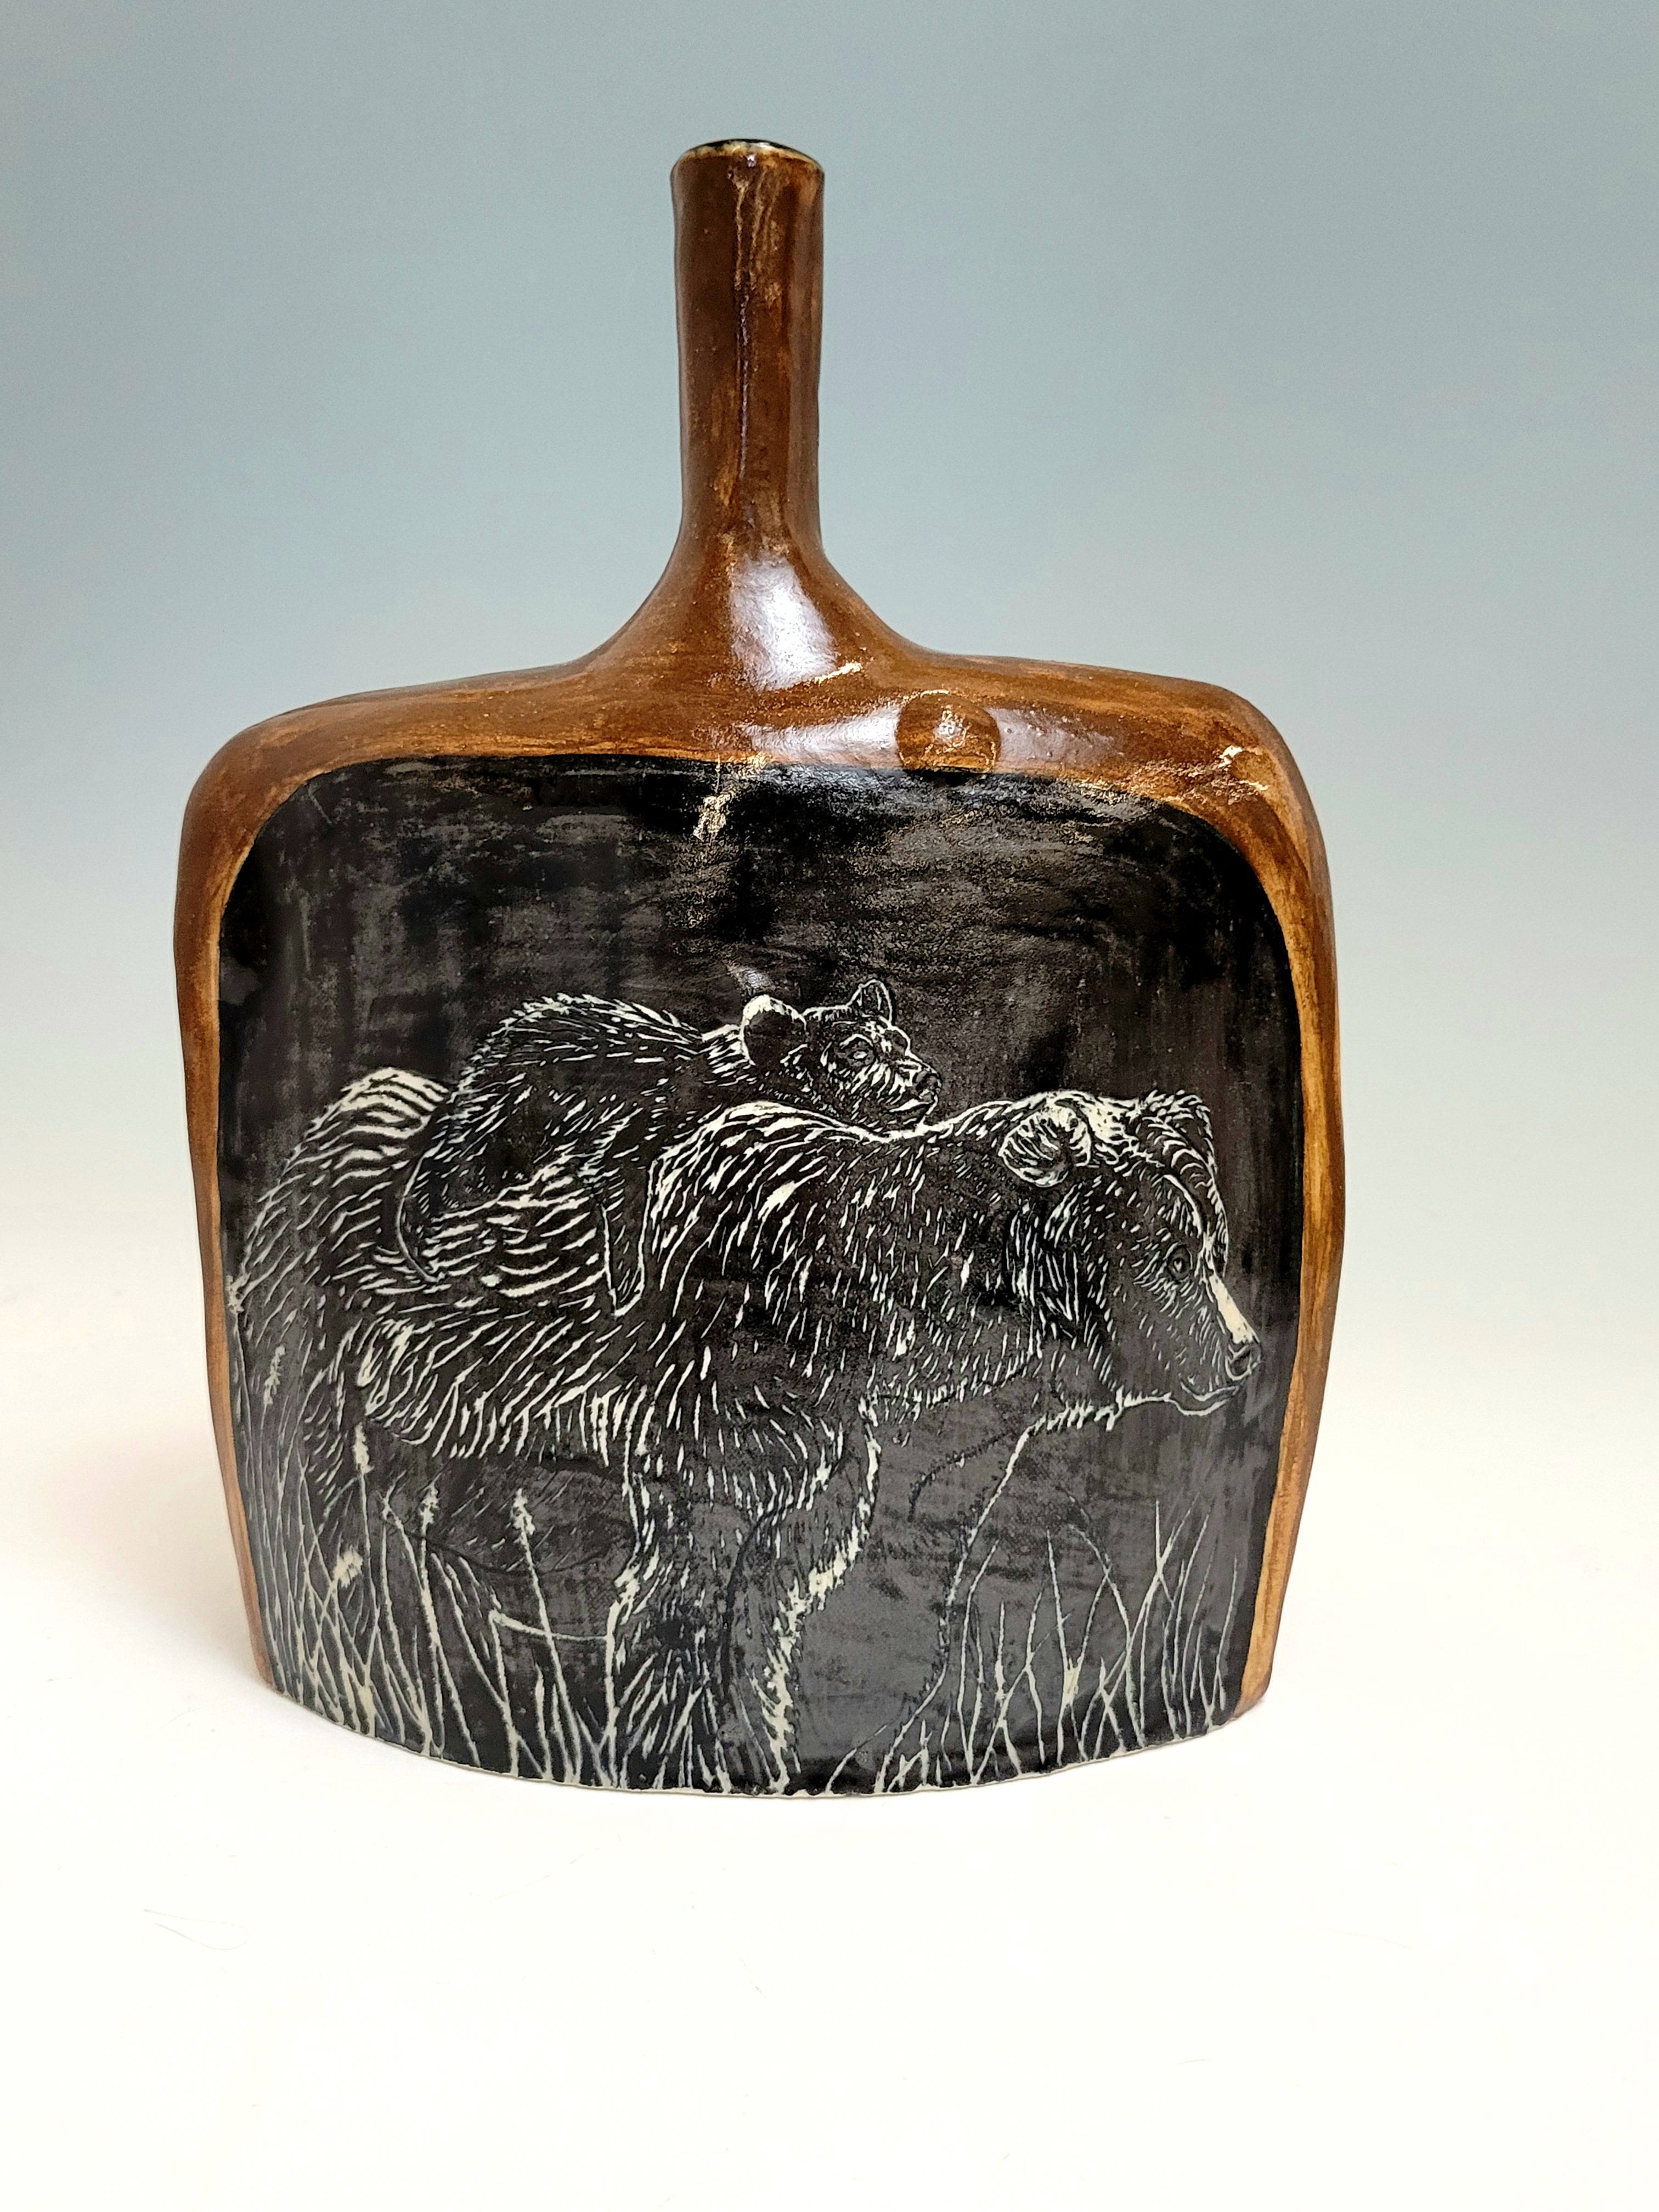 Image of the Black Bear ceramic vase sculpture front.